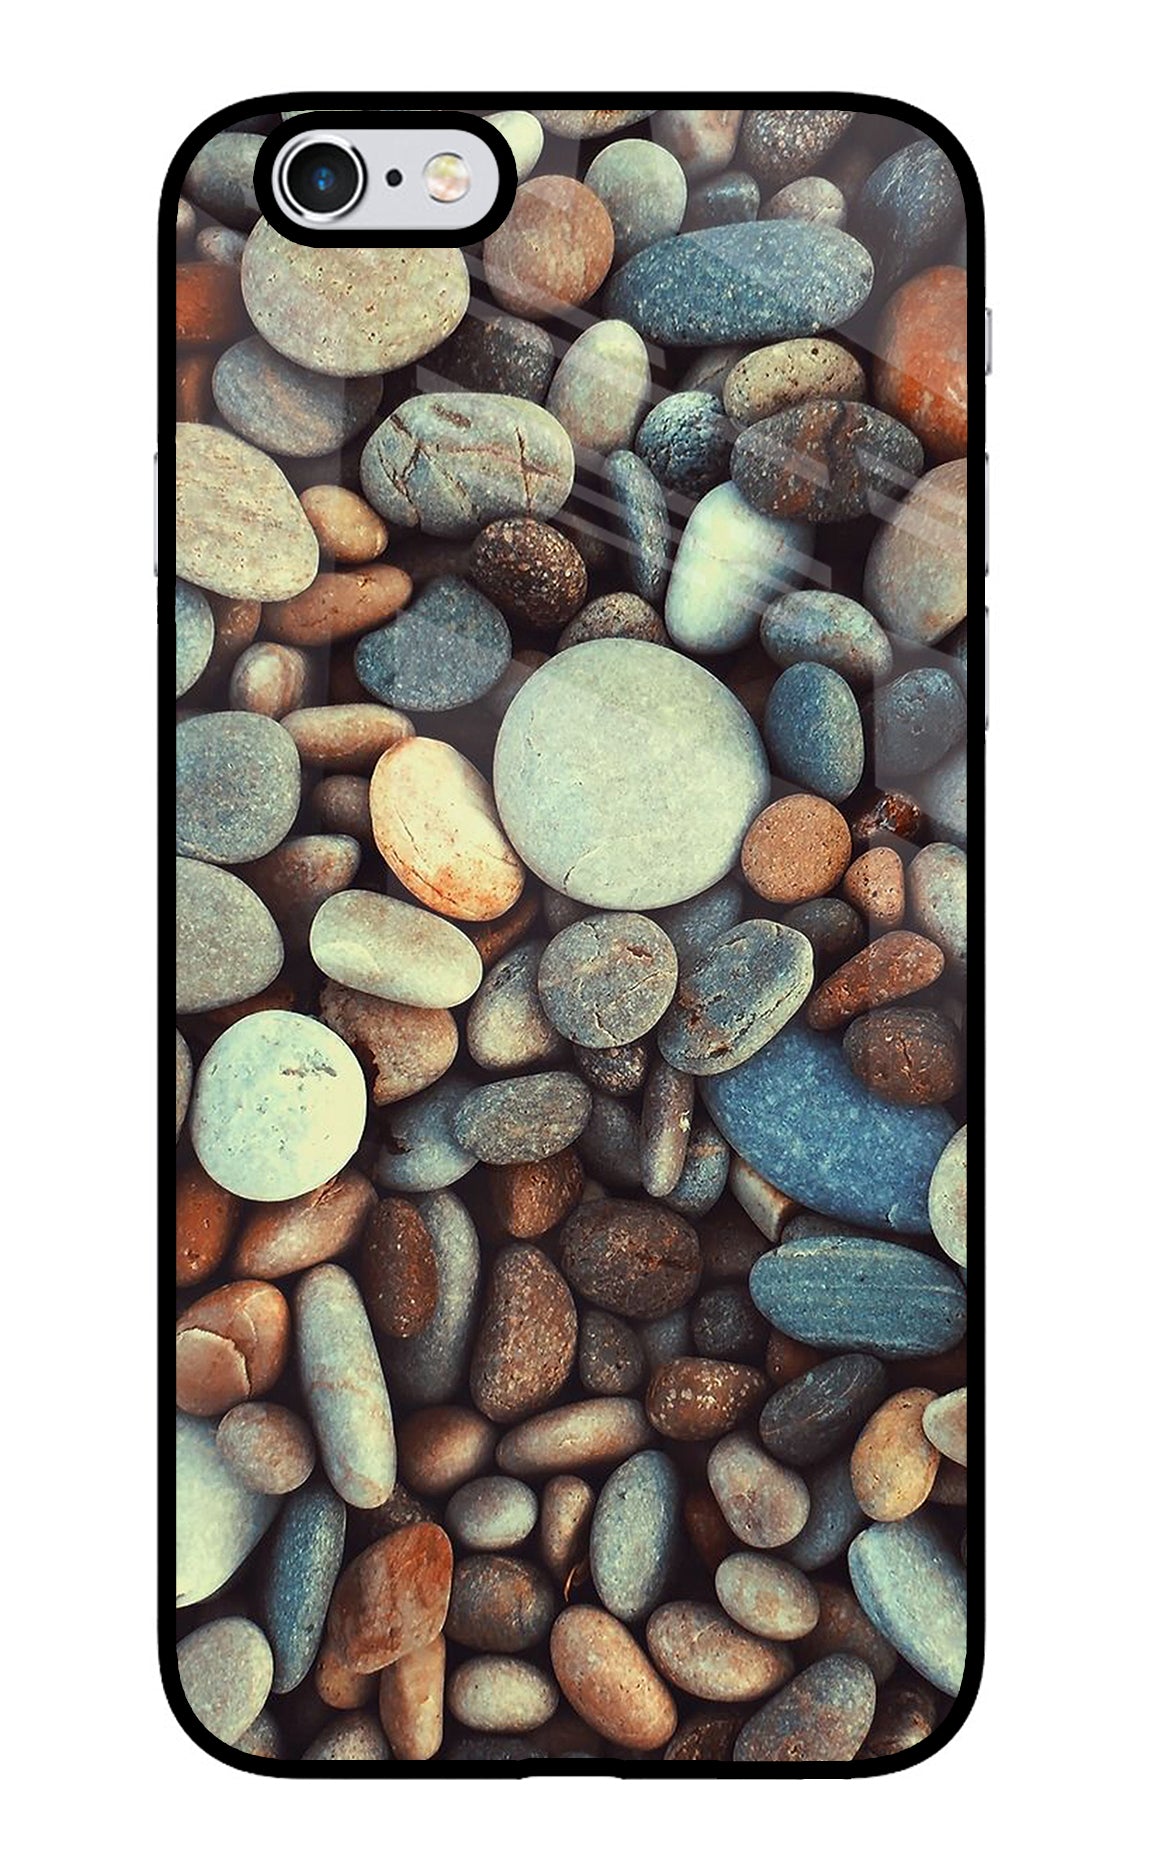 Pebble iPhone 6/6s Glass Case